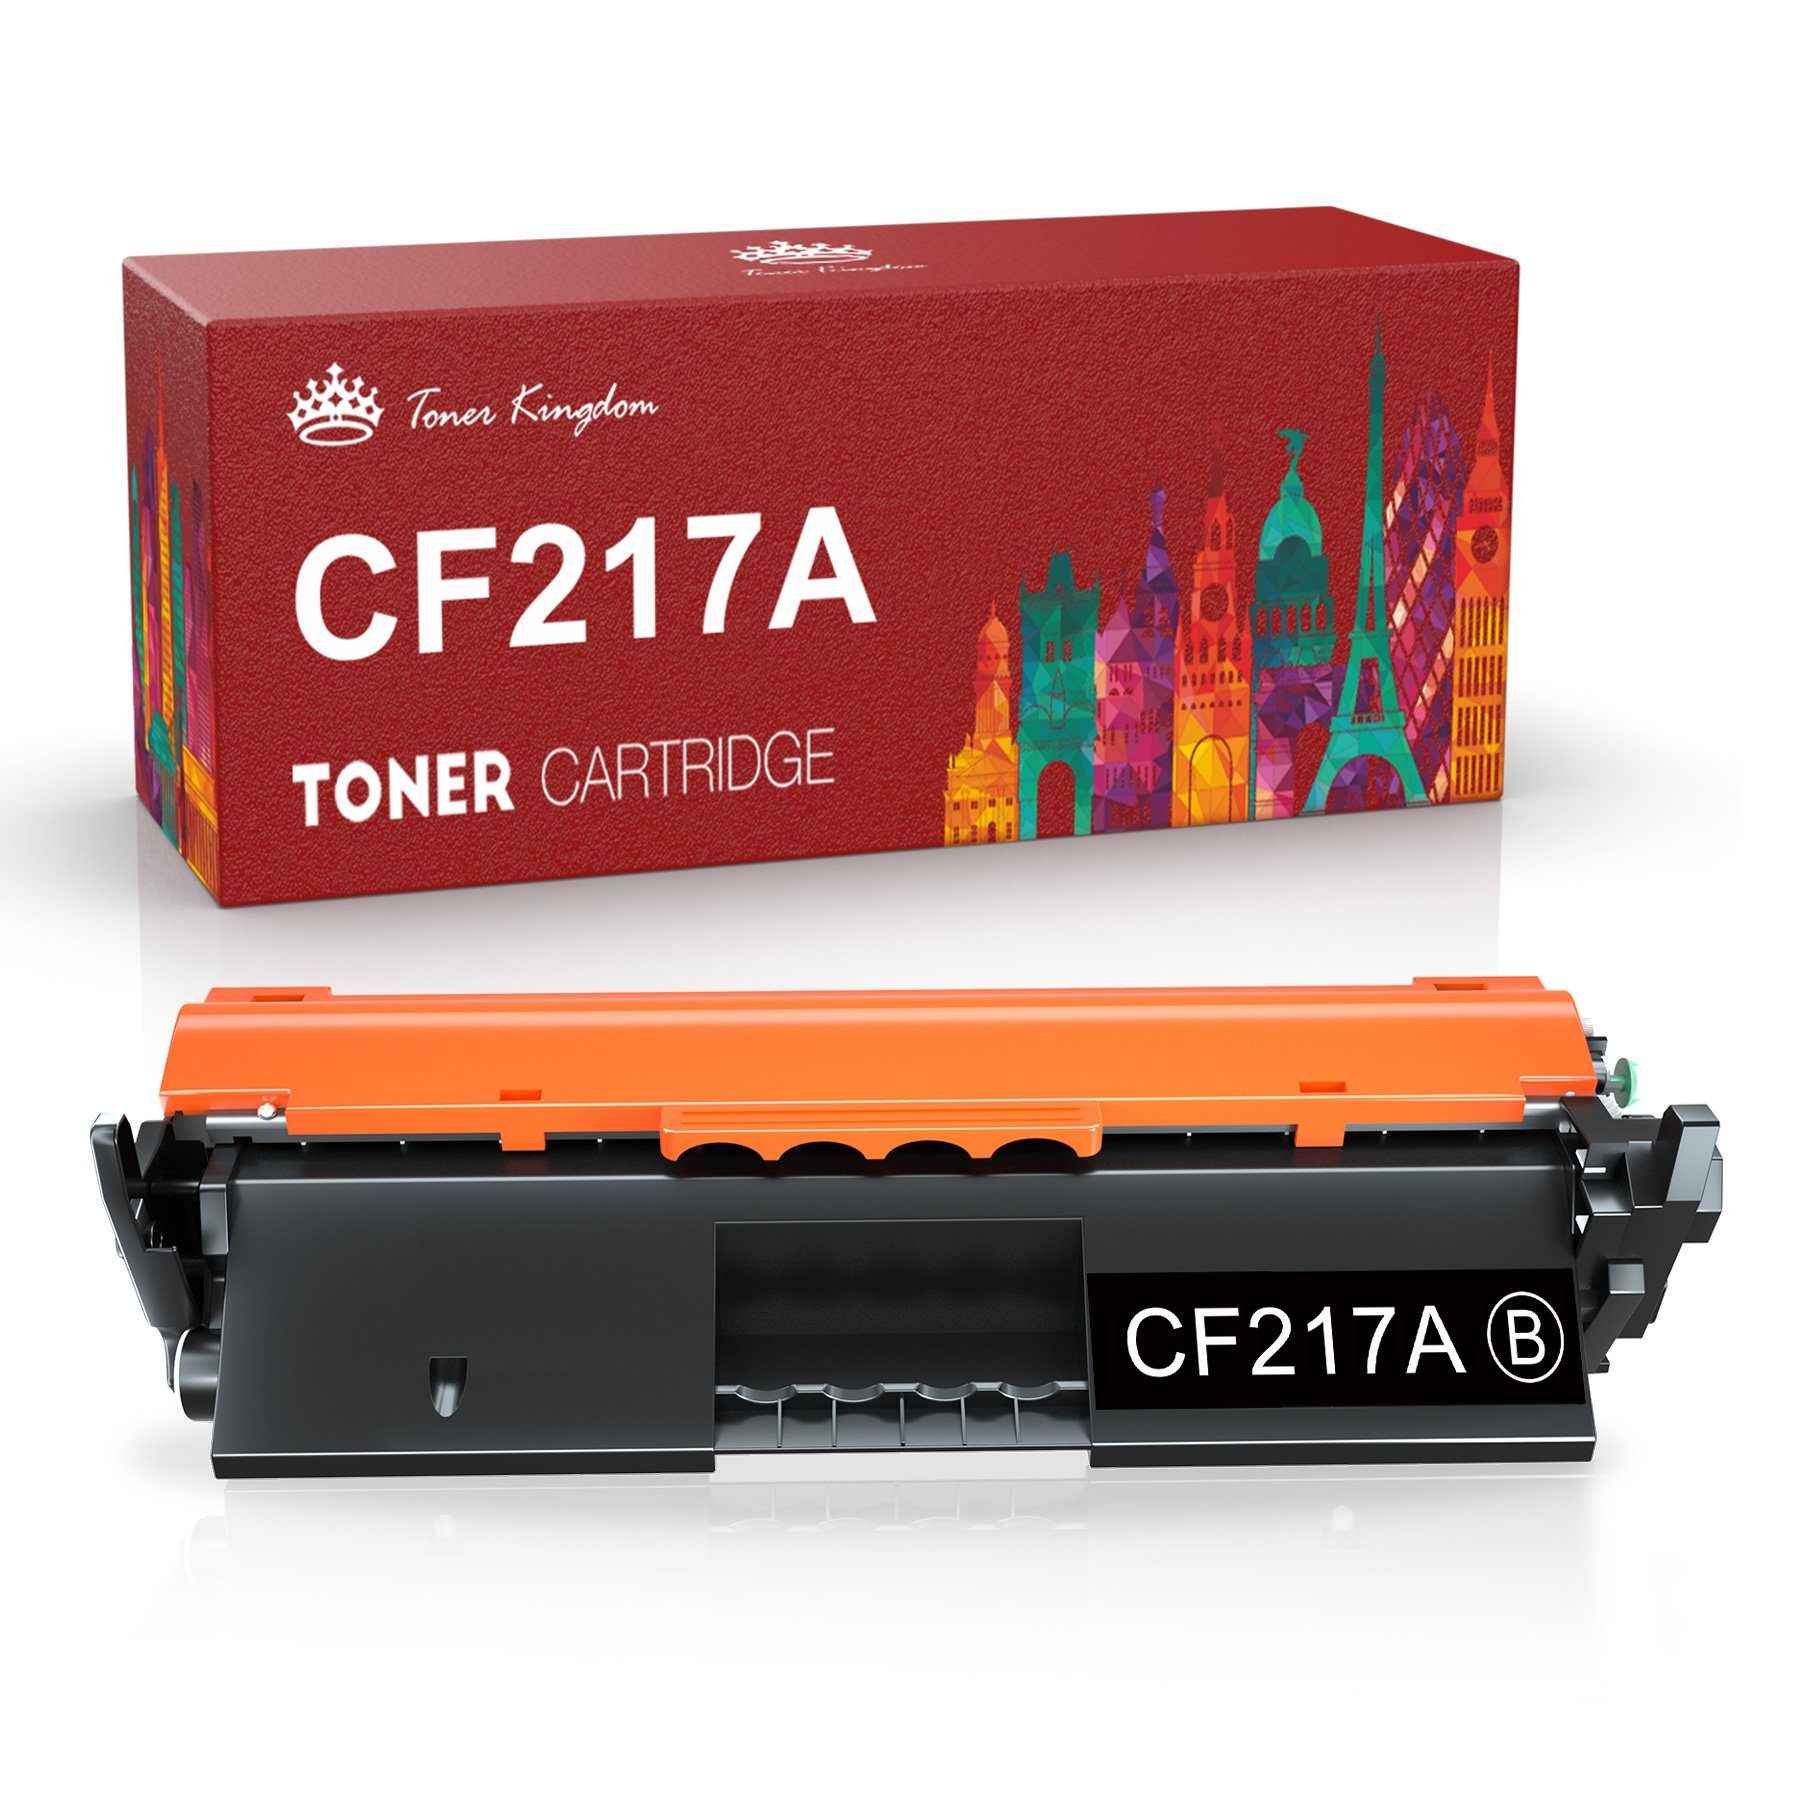 Toner Kingdom Tonerpatrone für HP CF217A 17A M102W M130FW M130NW M132SFNW, (LaserJet Pro M130fn M130a) | Tonerpatronen